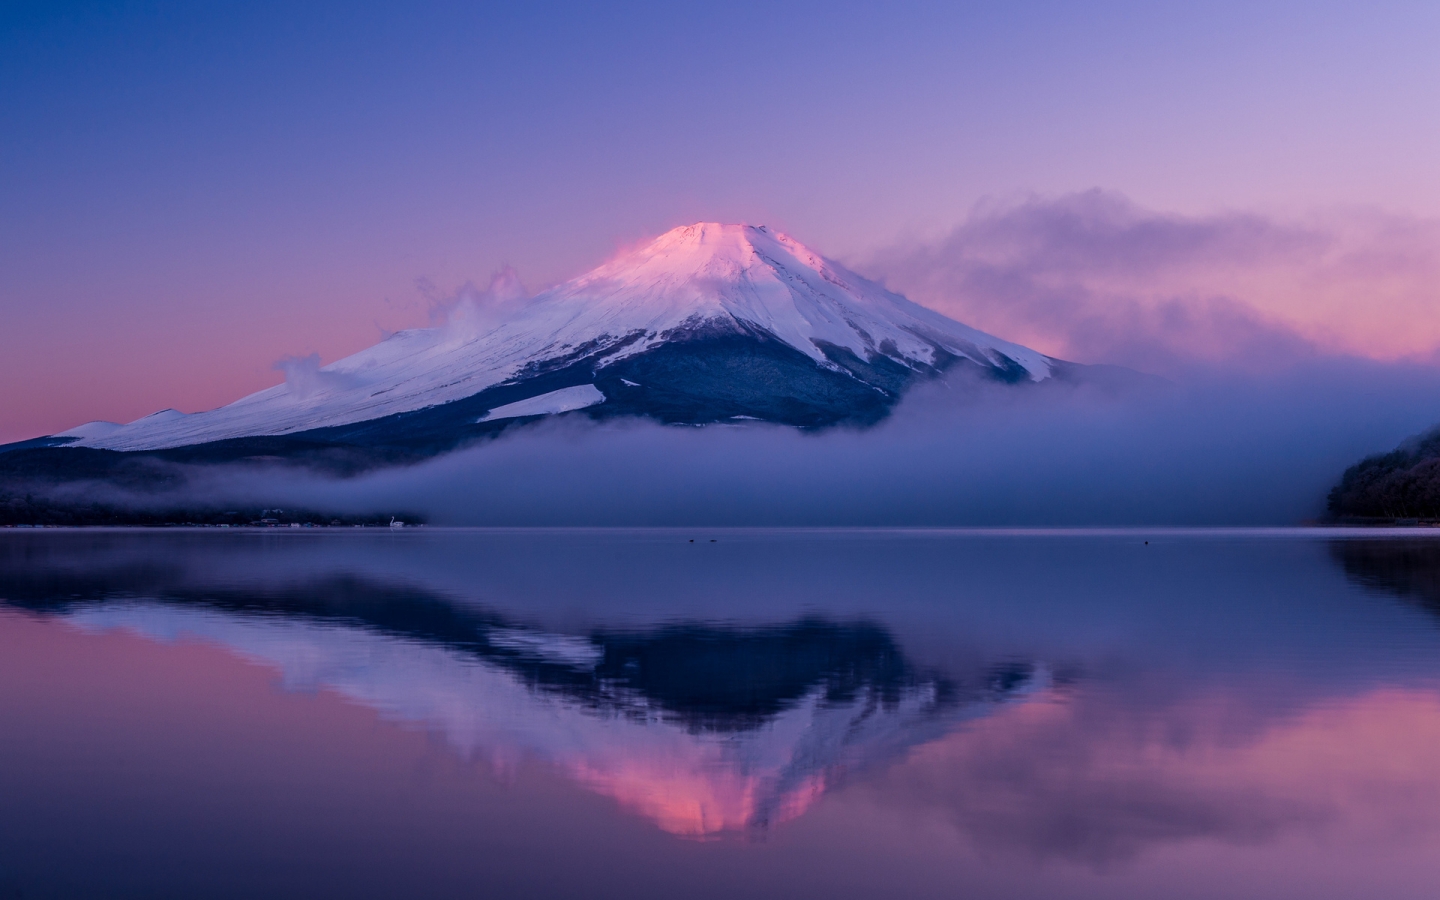 Honshu Island Japan for 1440 x 900 widescreen resolution